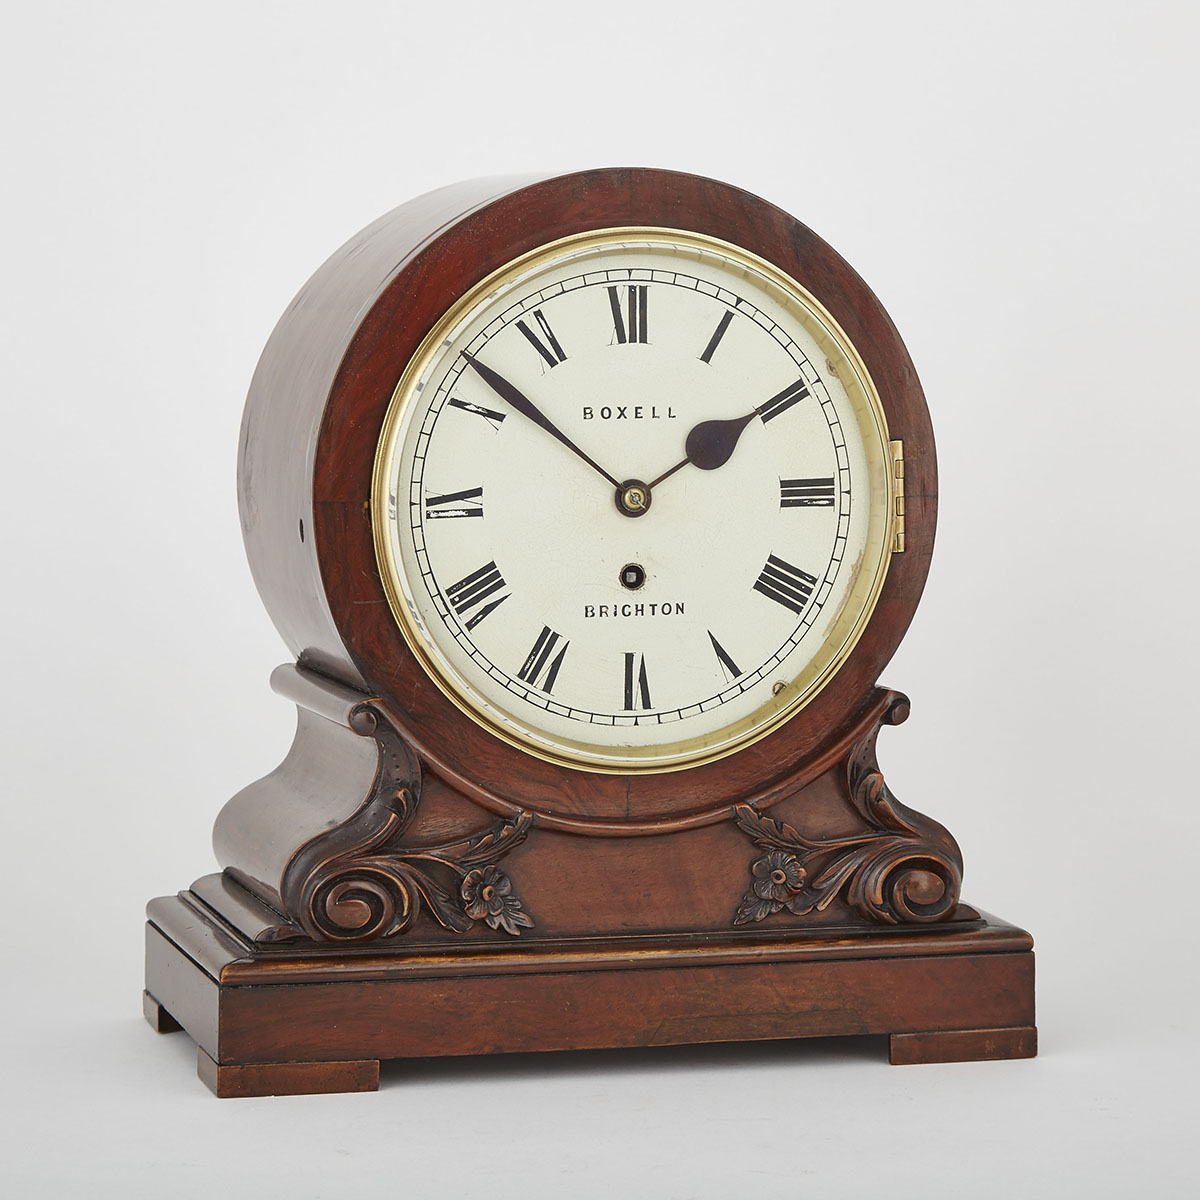 Early Victorian Rosewood Drum Head Library/Boardroom Clock, Thomas Boxell, Brighton, c.1840